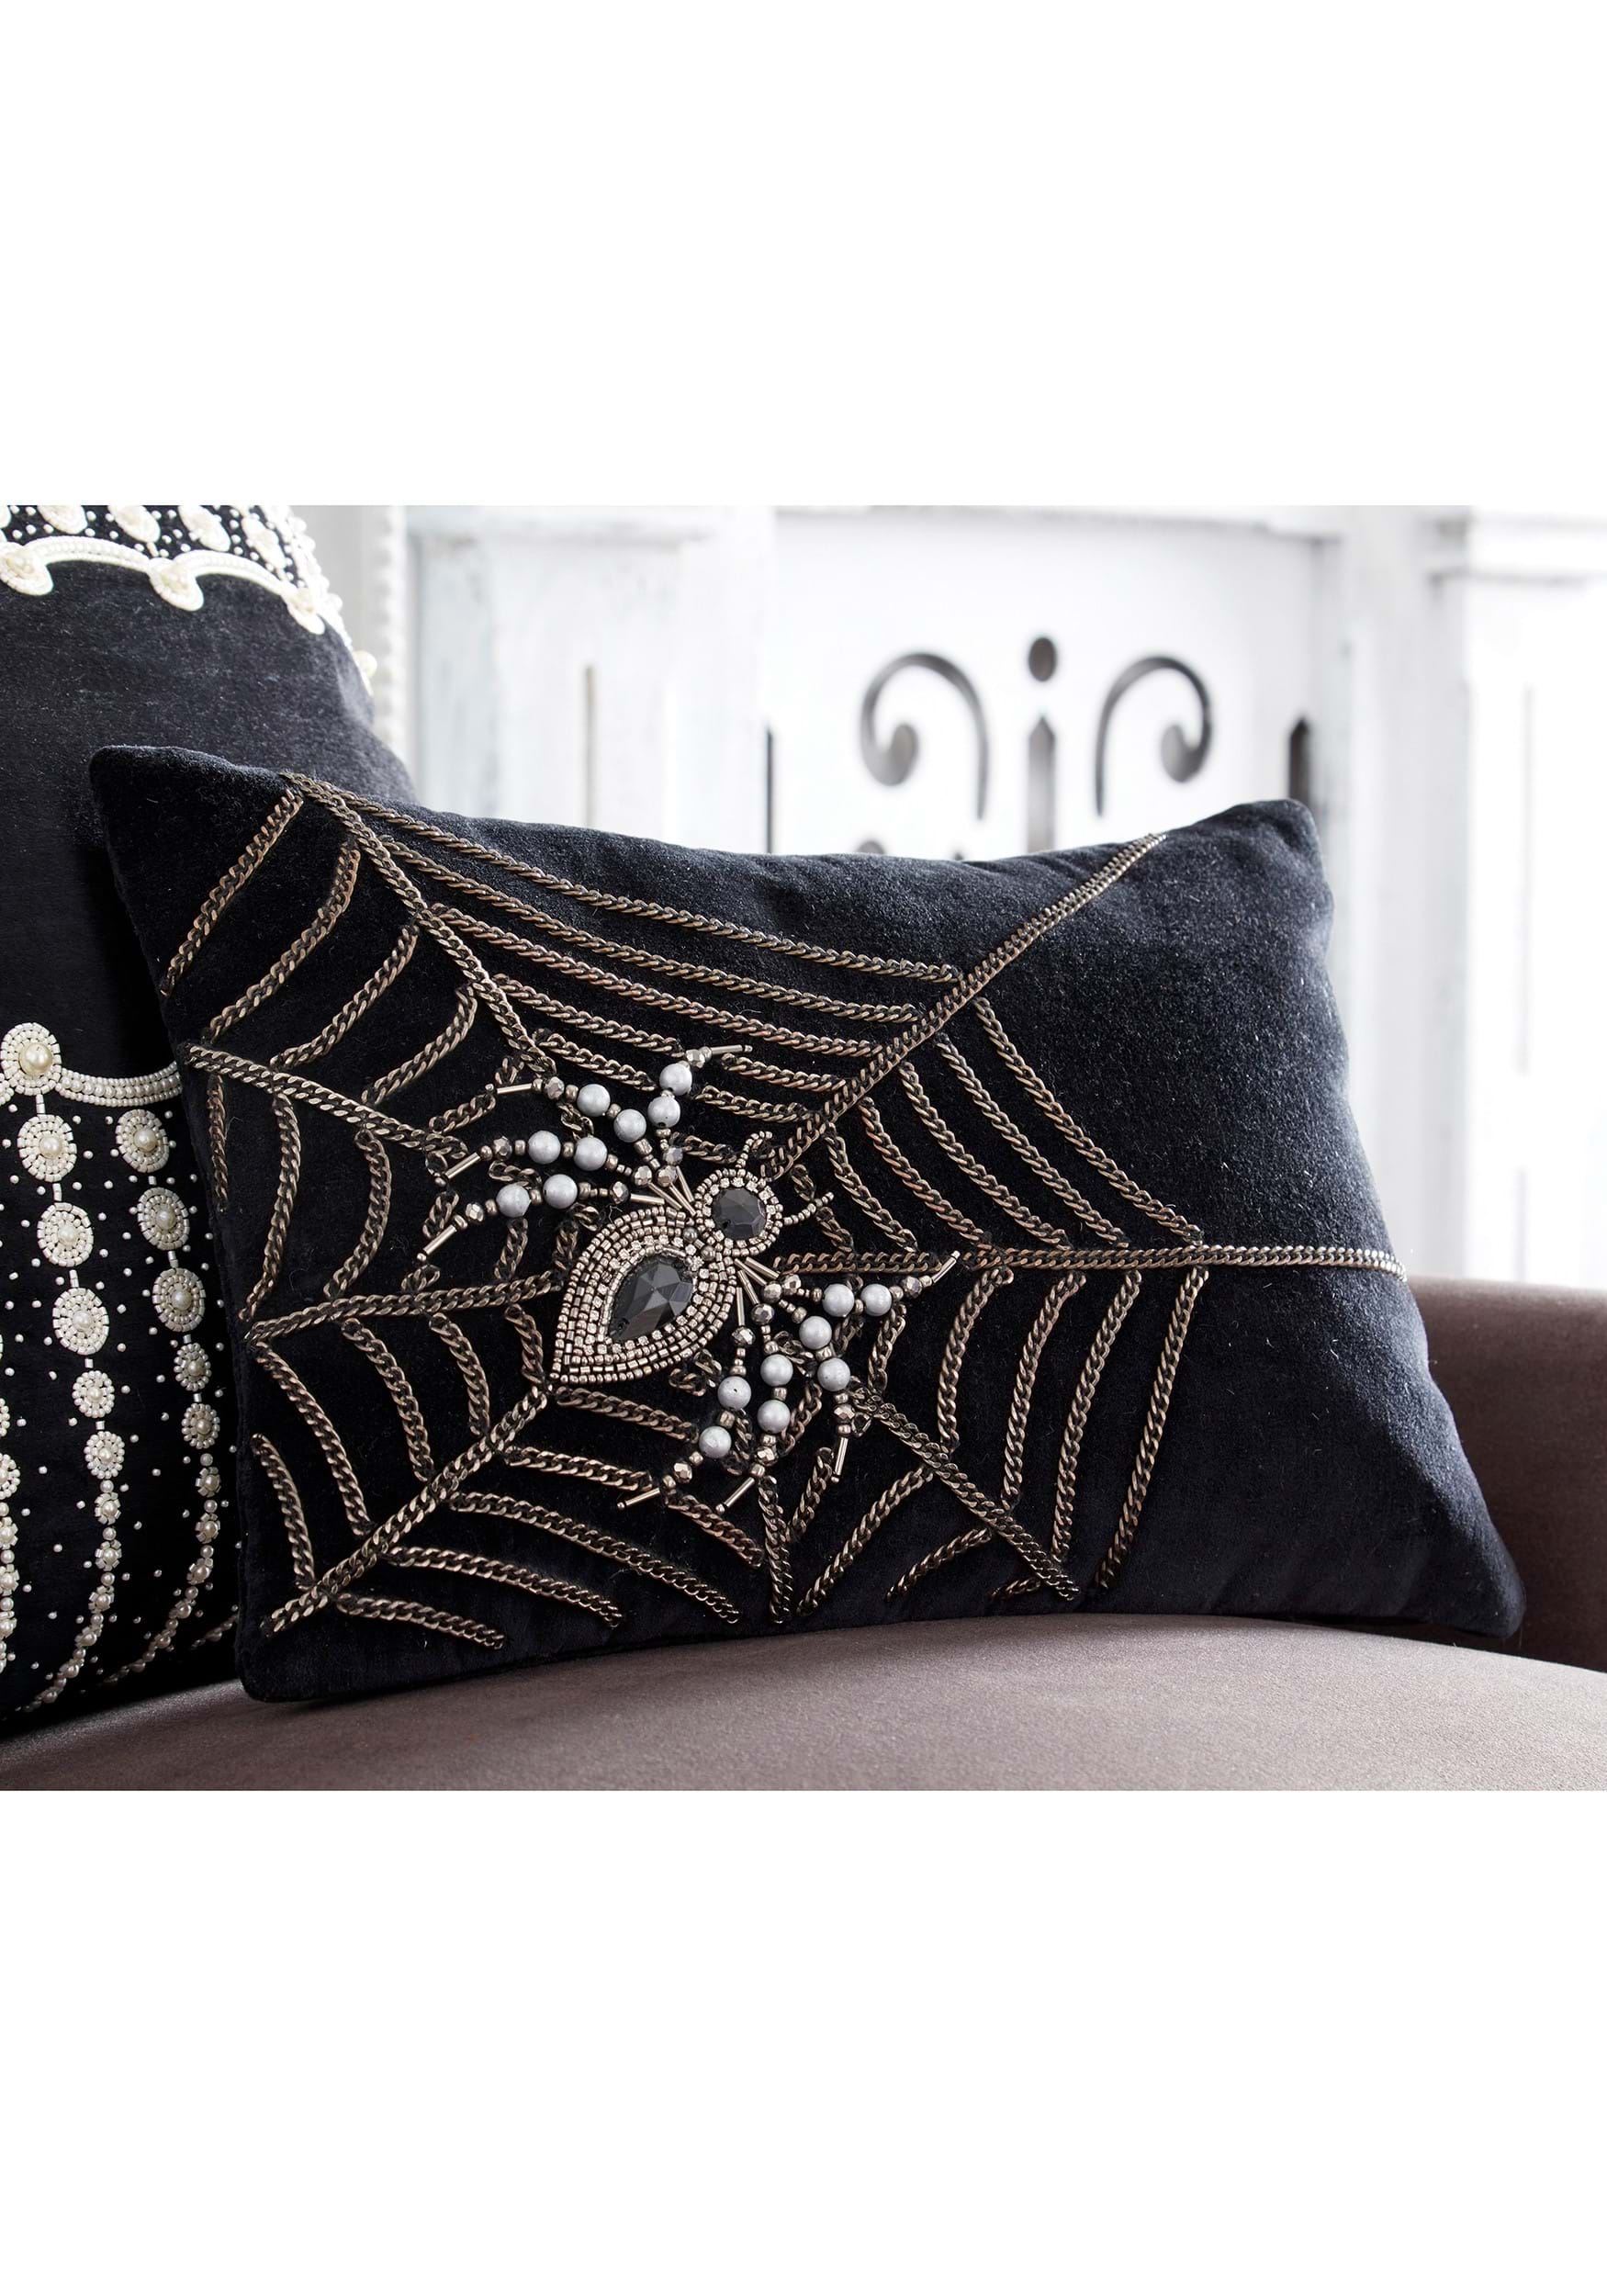 Magaschoni Halloween SPIDER Rhinestone Bling Black Throw Pillow Home Decor  20”